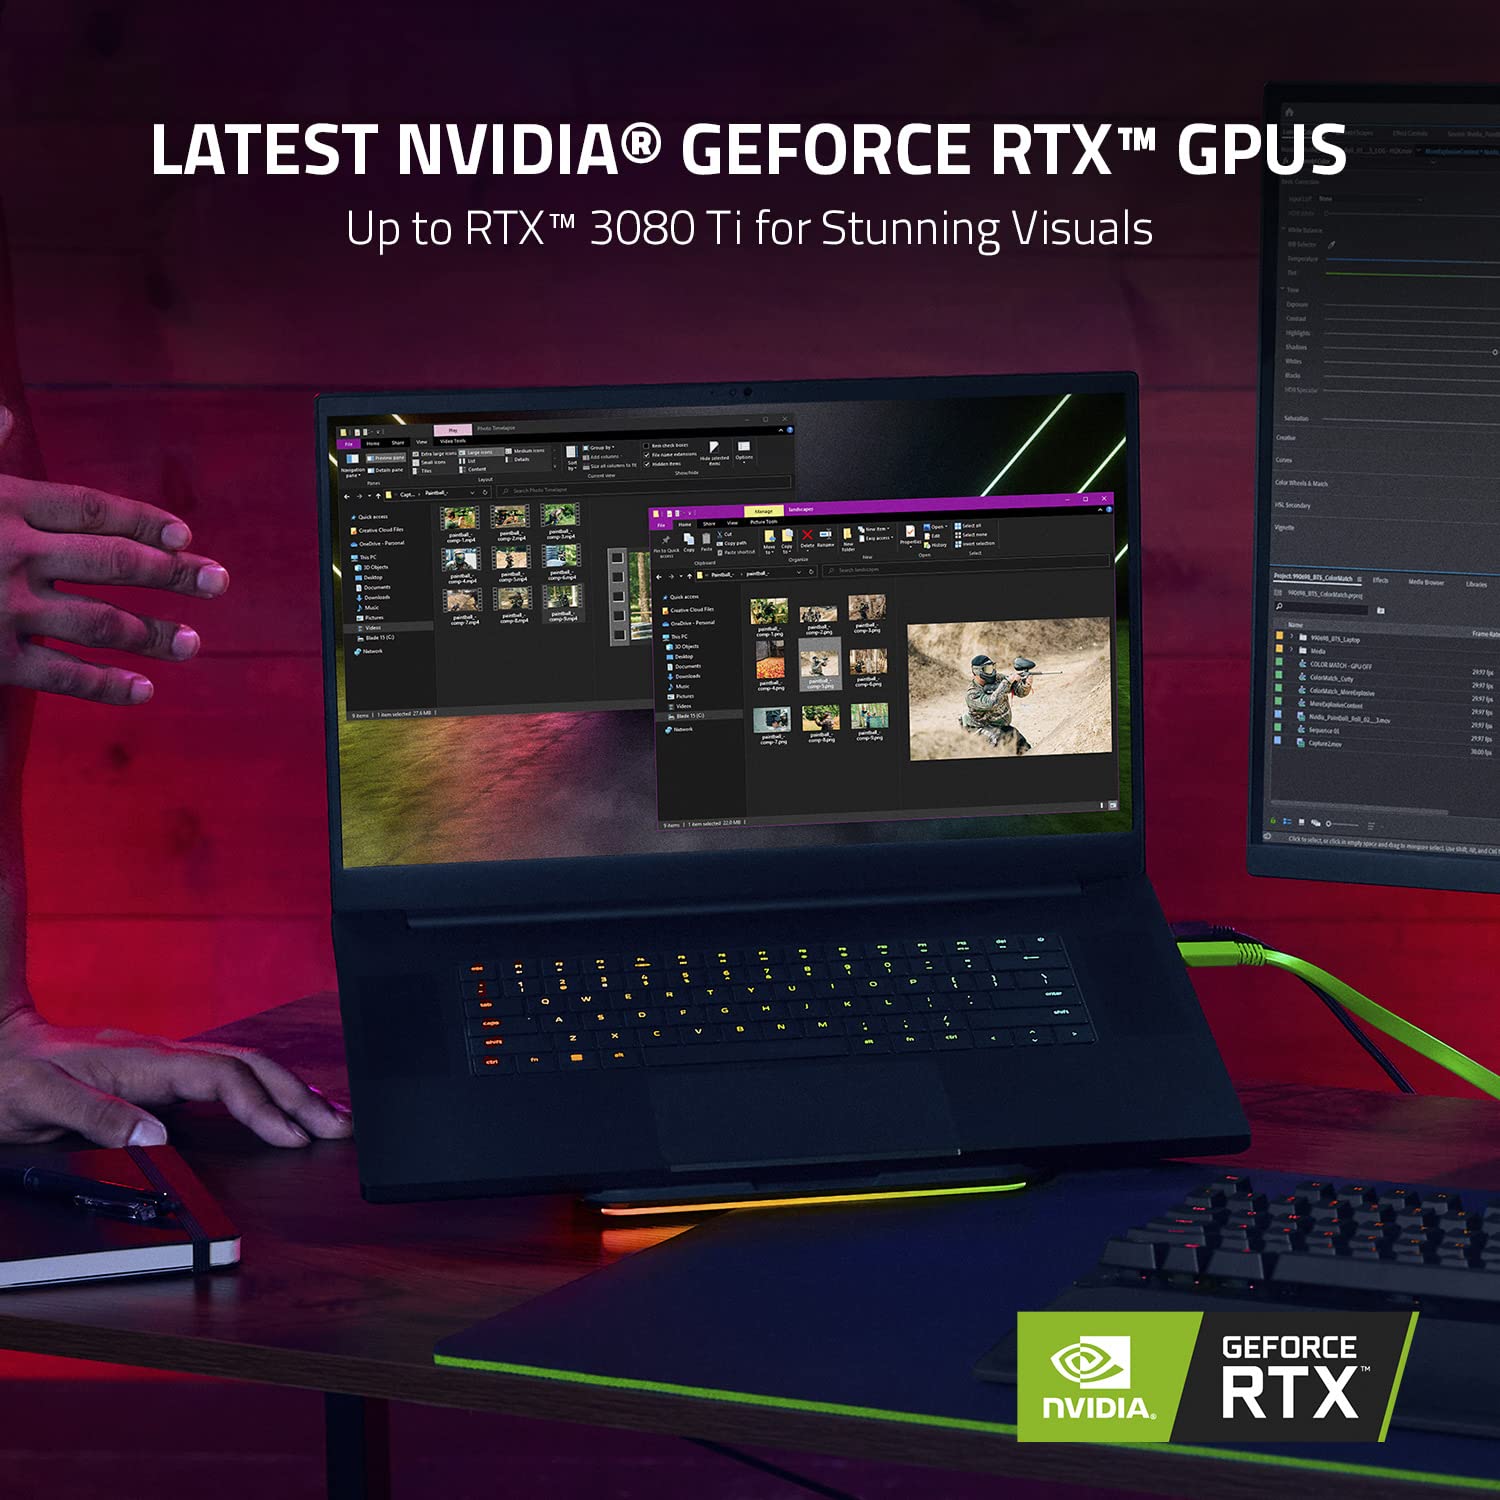 Razer Blade 17 Gaming Laptop: NVIDIA GeForce RTX 3070 Ti - 12th Gen Intel 14-Core i9 CPU - 17.3